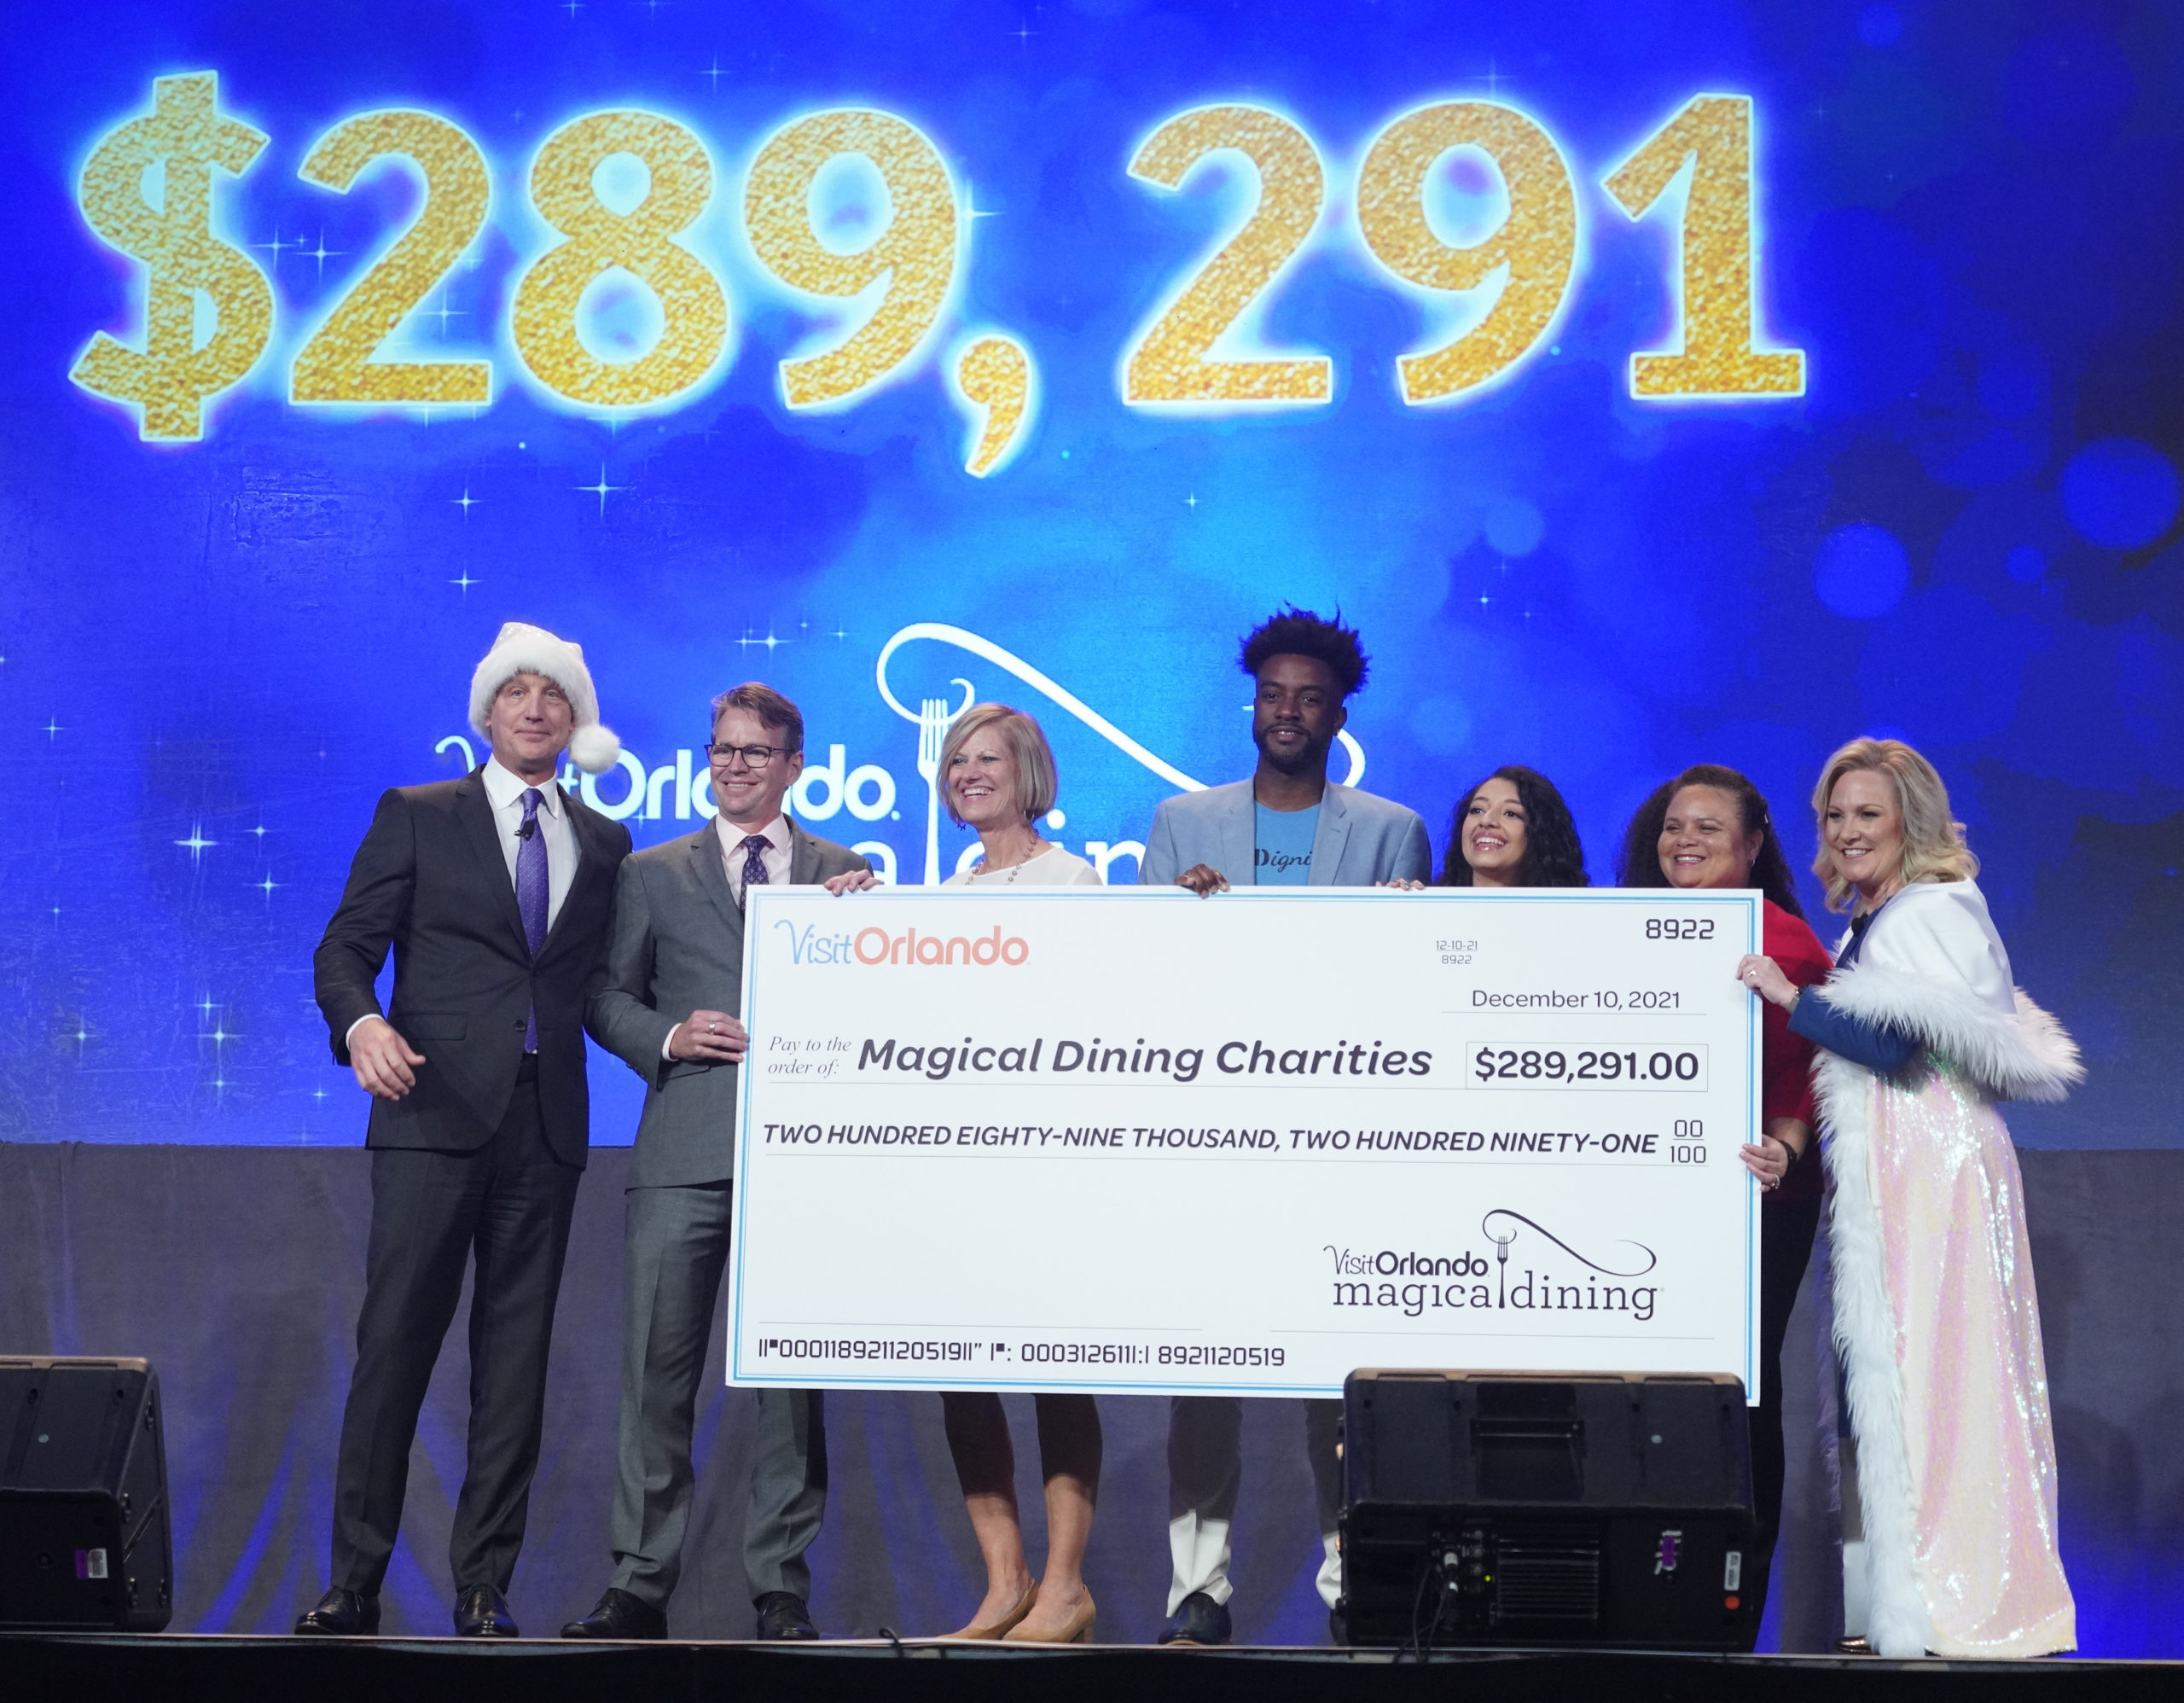 Visit Orlando's Magical Dining initiative raised 289,291 this year